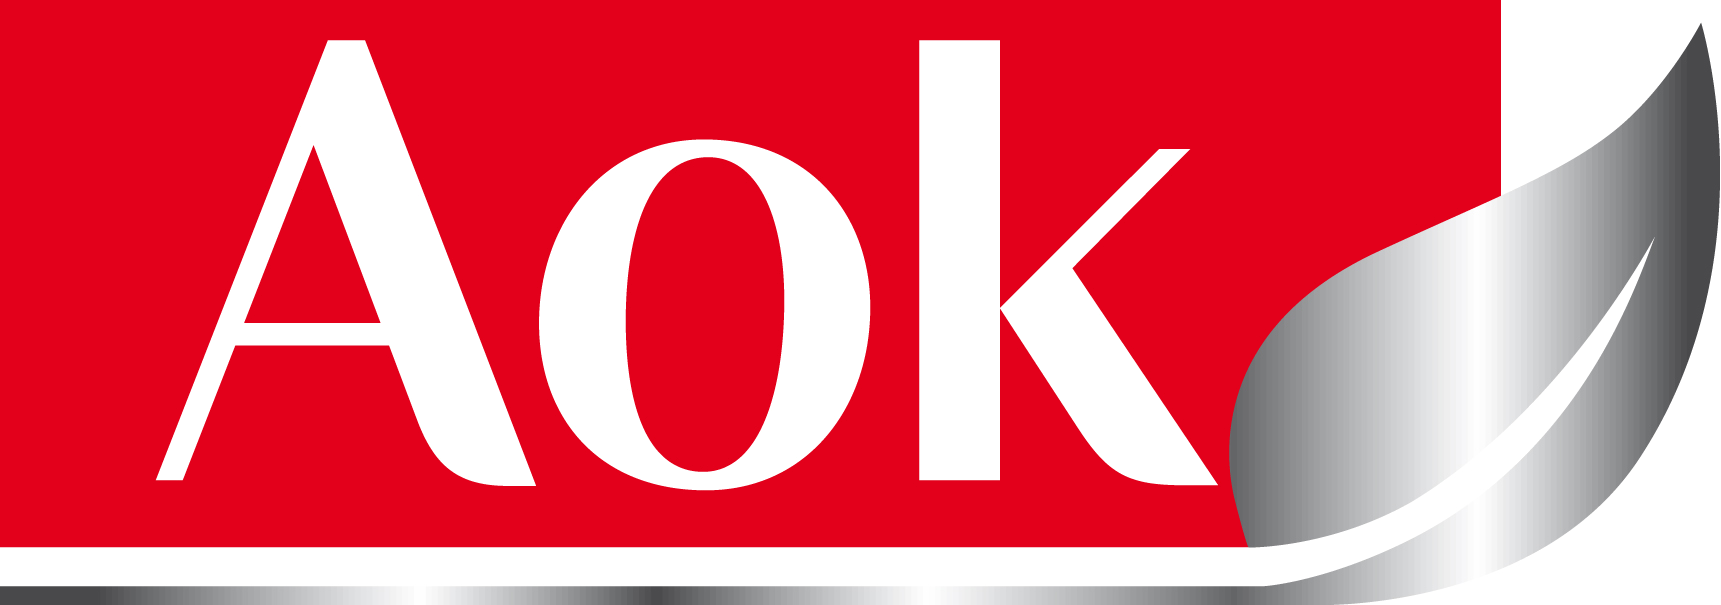 Aok Logo Vector PNG - 97888